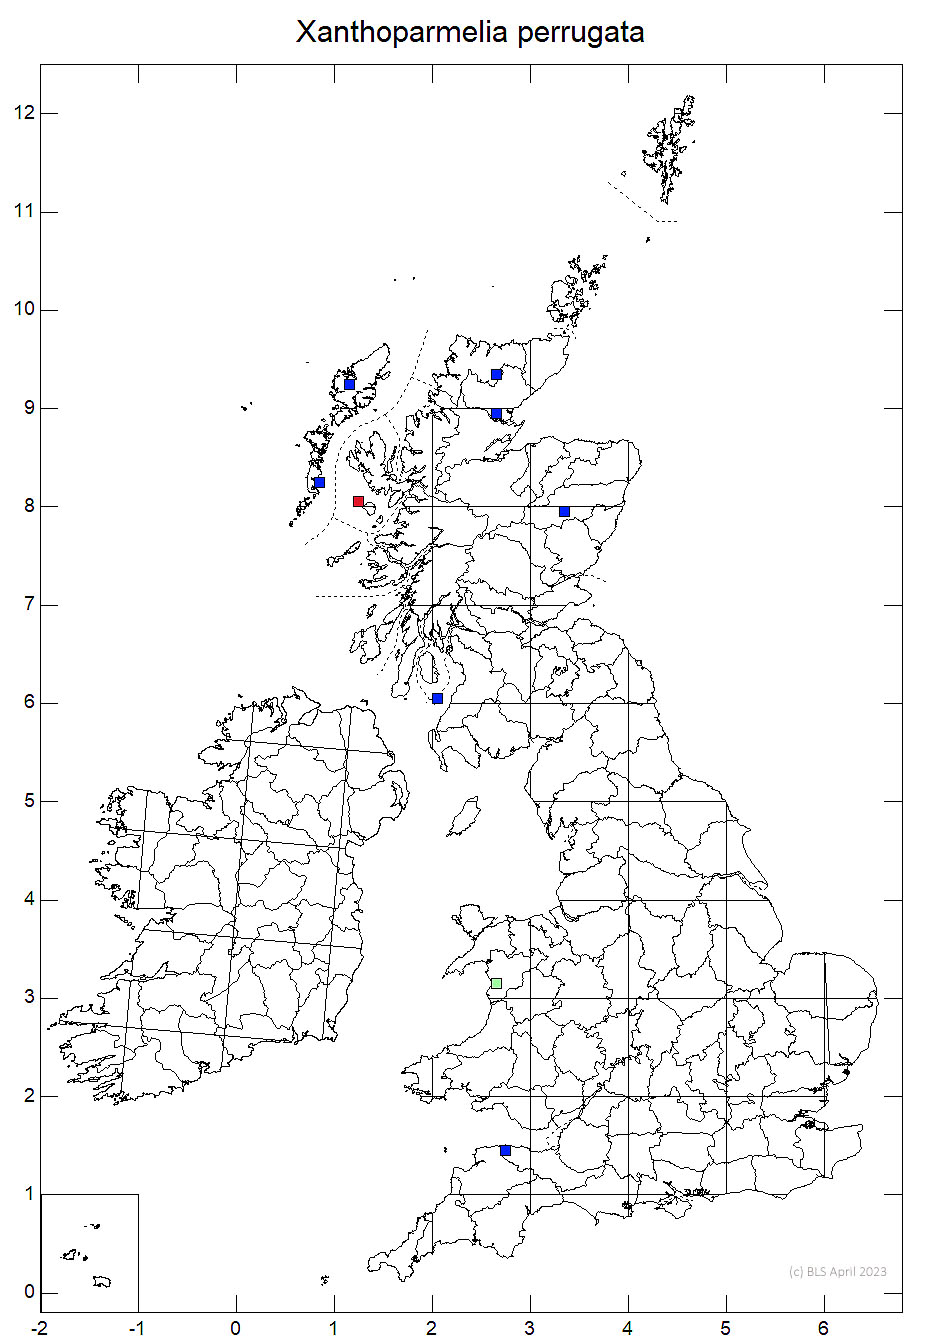 Xanthoparmelia perrugata 10km sq distribution map